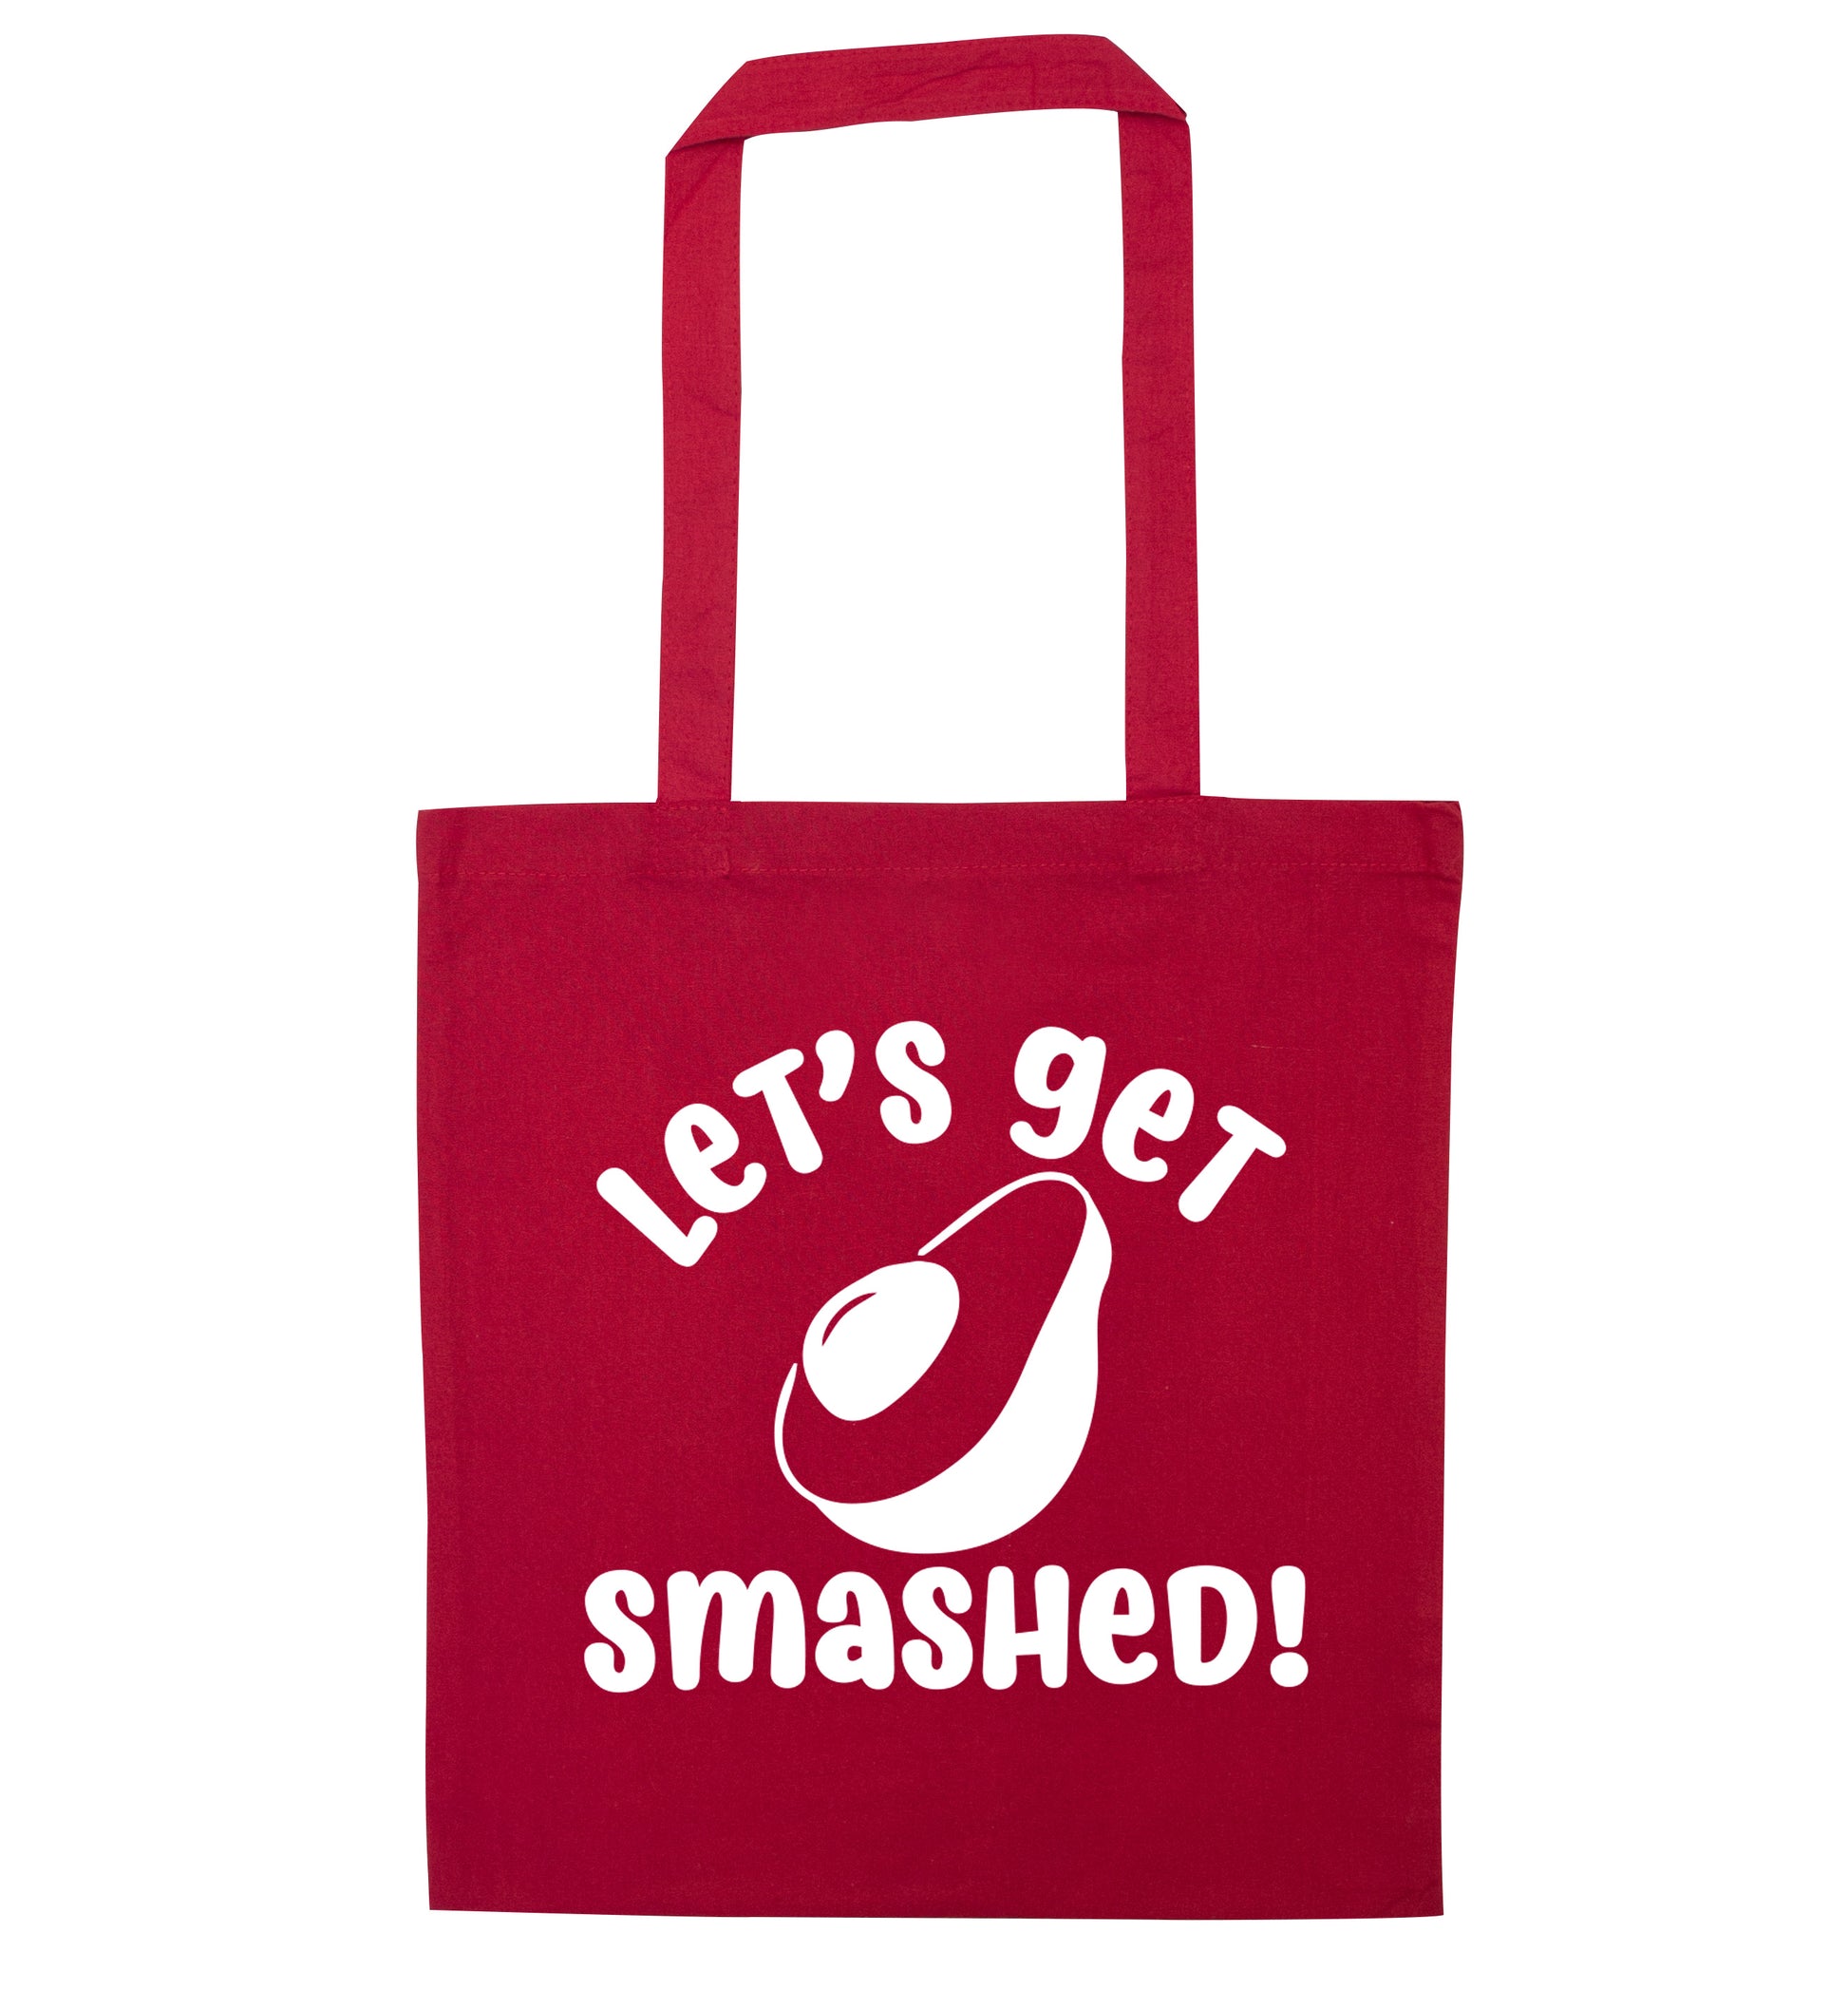 Let's get smashed red tote bag